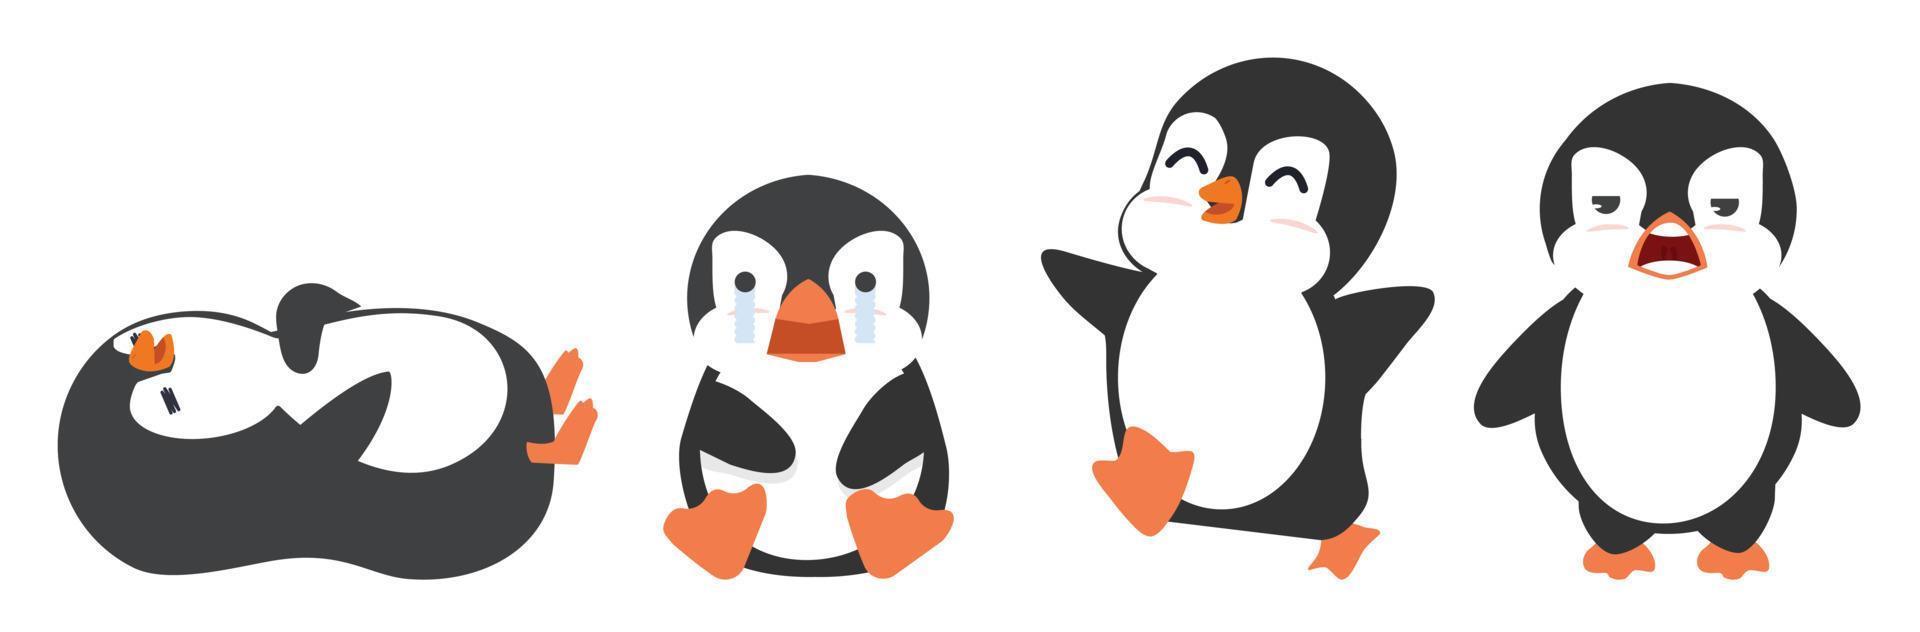 Cute little penguin vector isolated on white